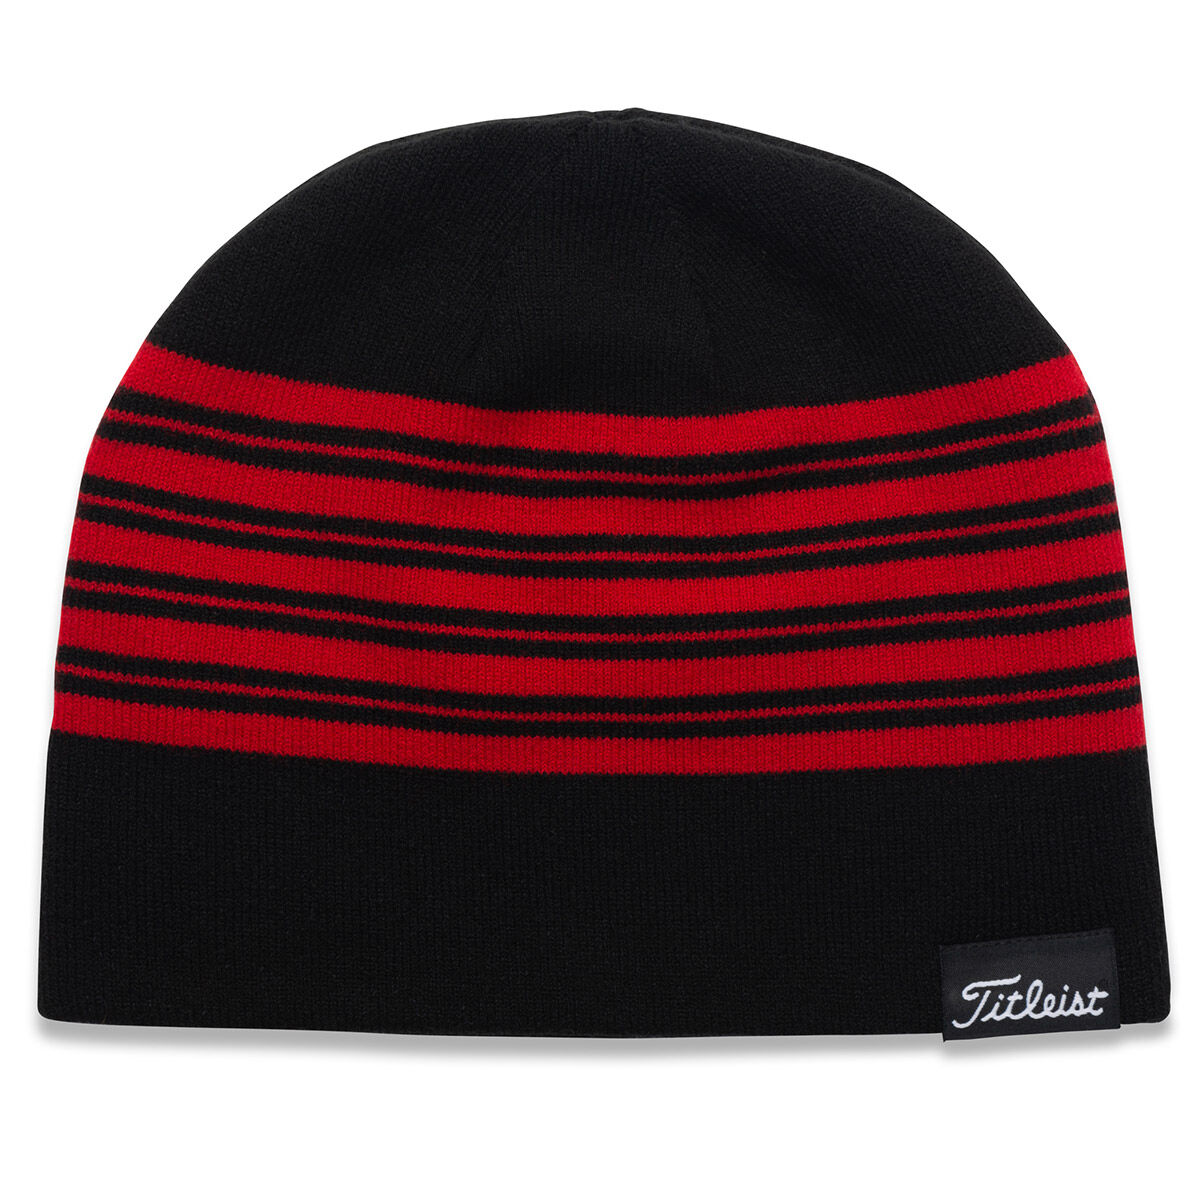 Titleist Black and Red Lifestyle Reversible Beanie Hat, One Size | American Golf von Titleist